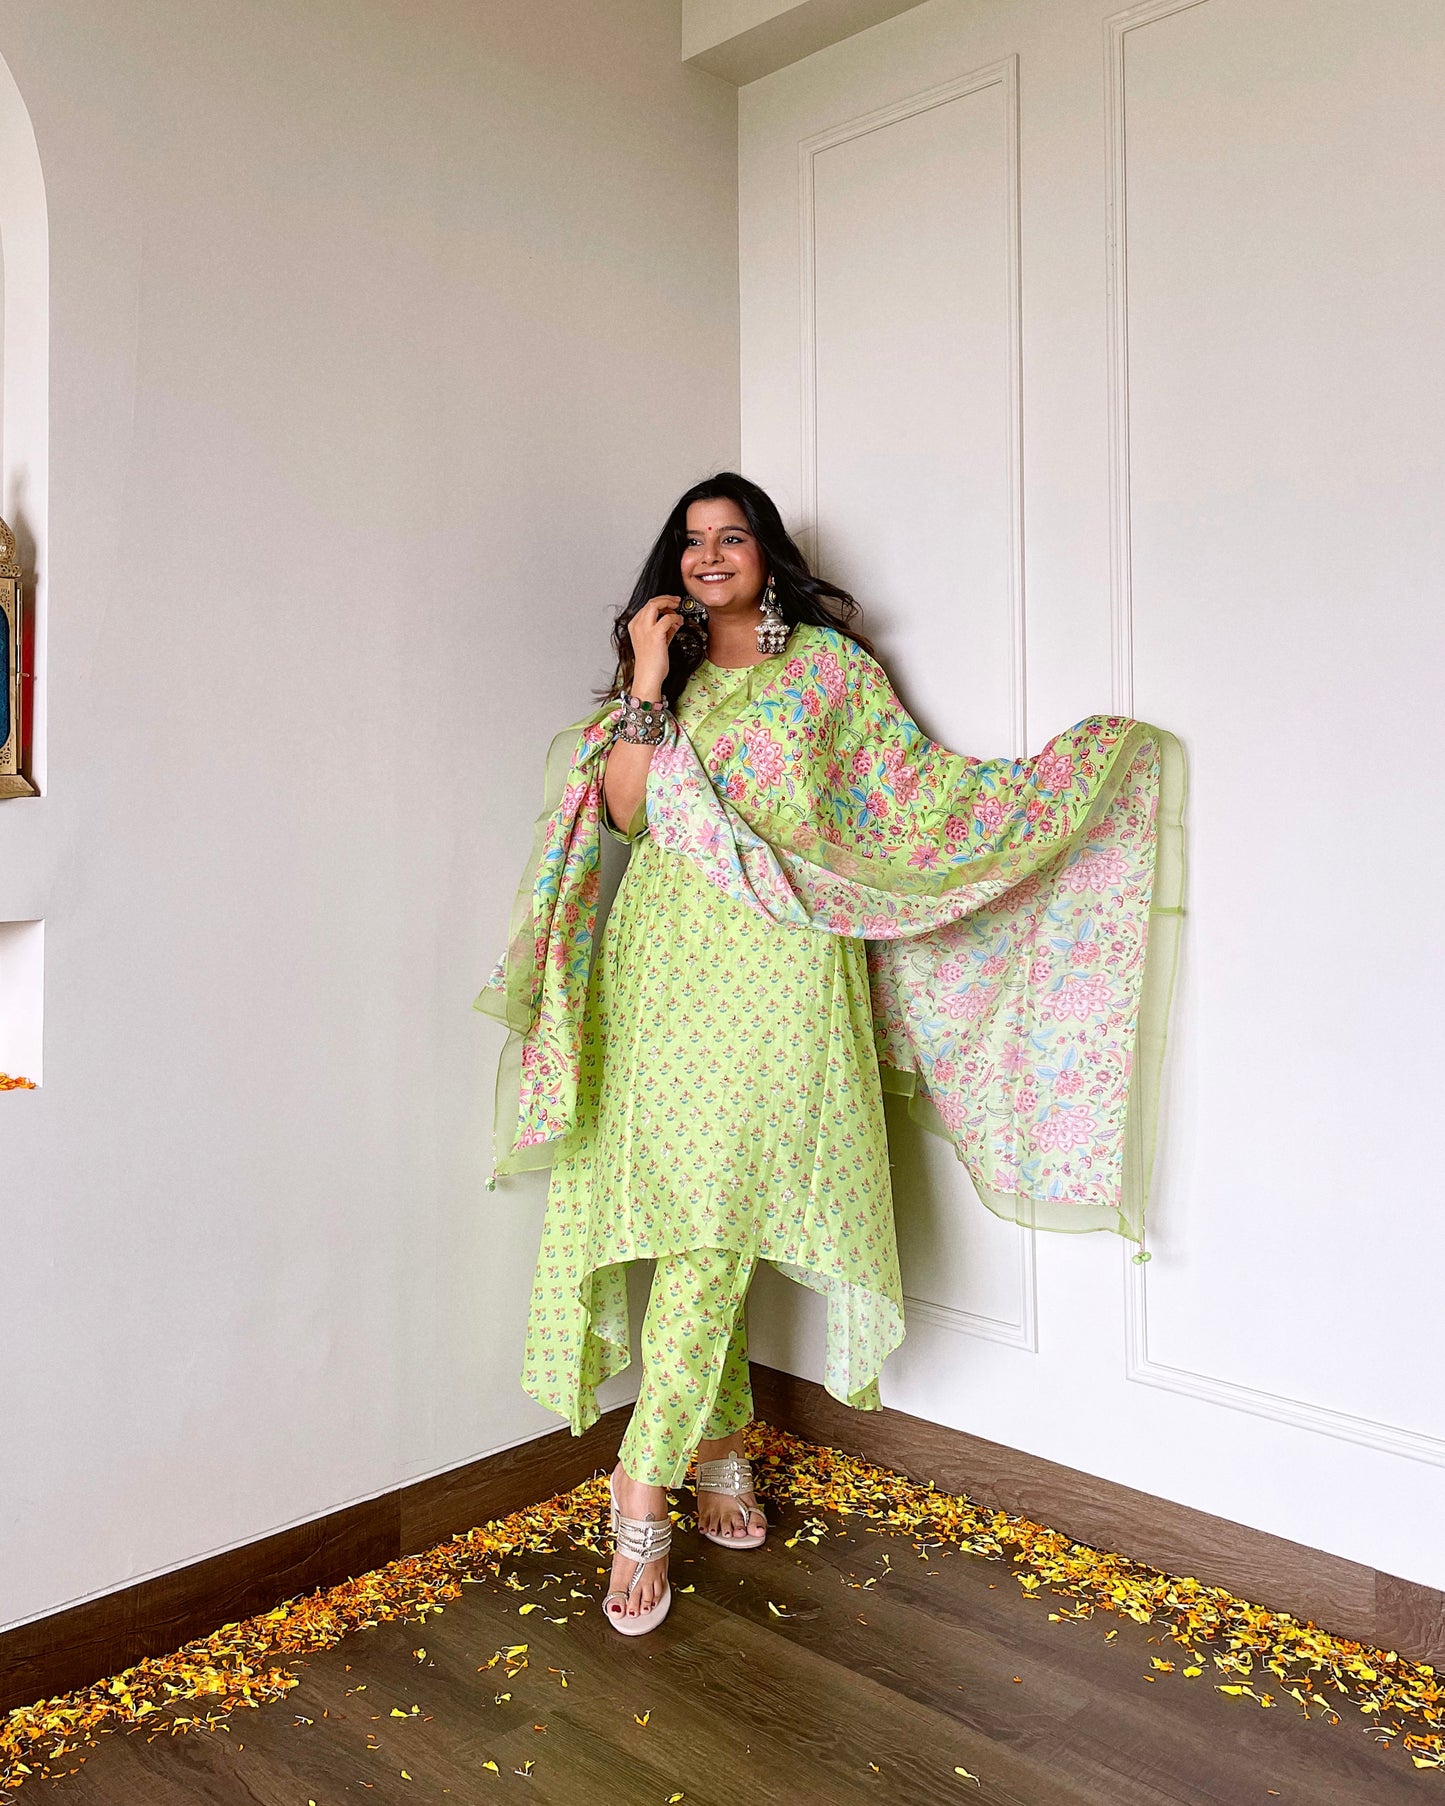 Radhika Bhardwaj in Mishal - The Light Green A-Line Suit Set